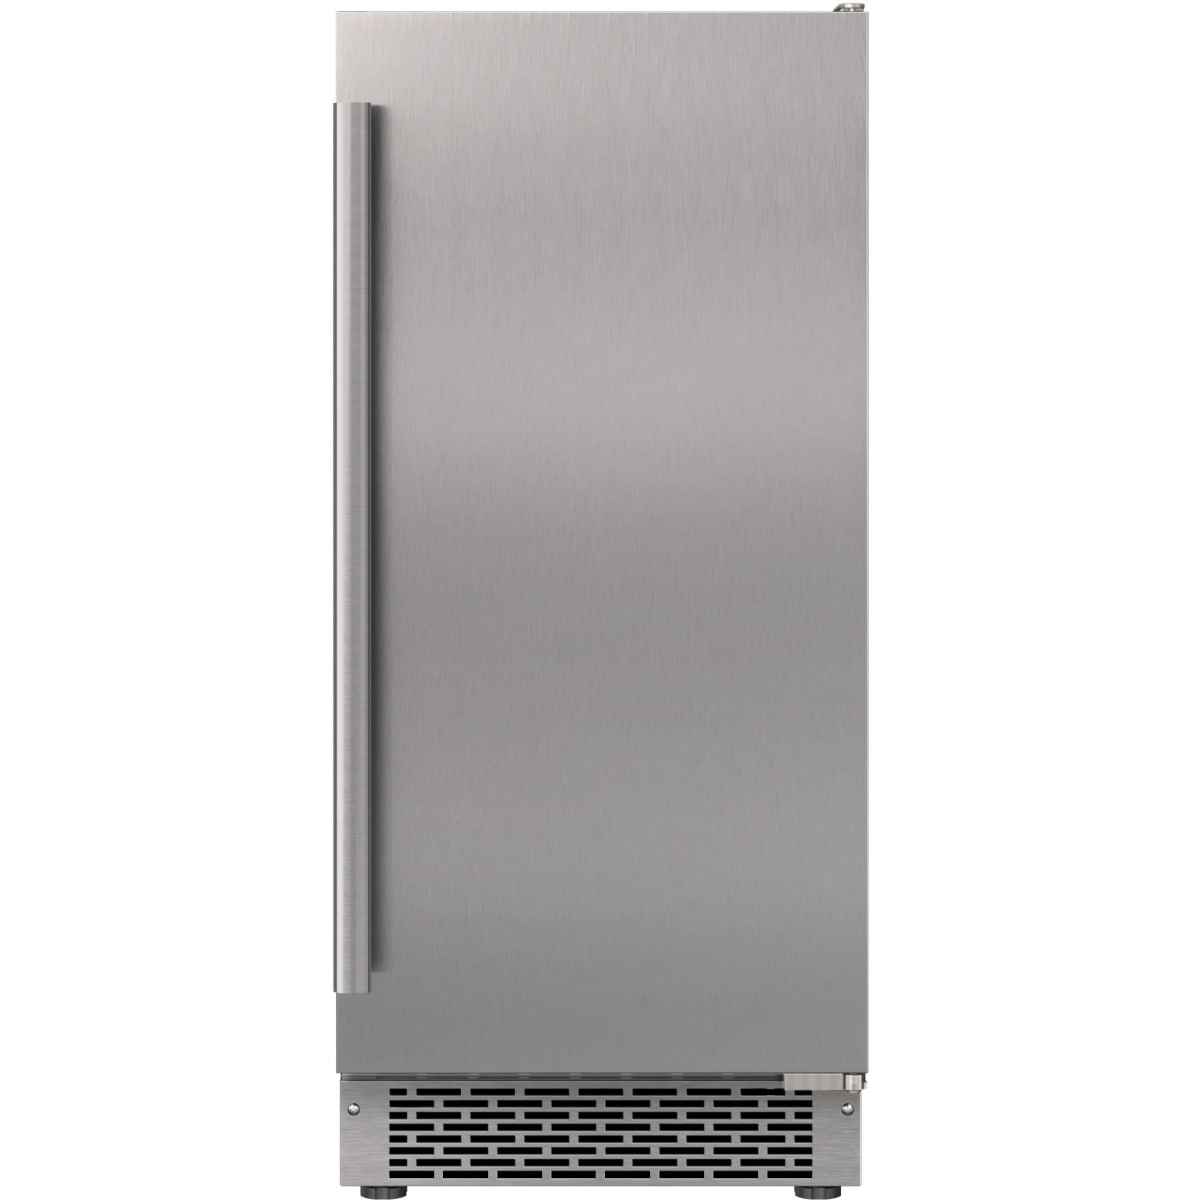 Magic Chef Ice Makers Refrigeration Appliances - MCIM22